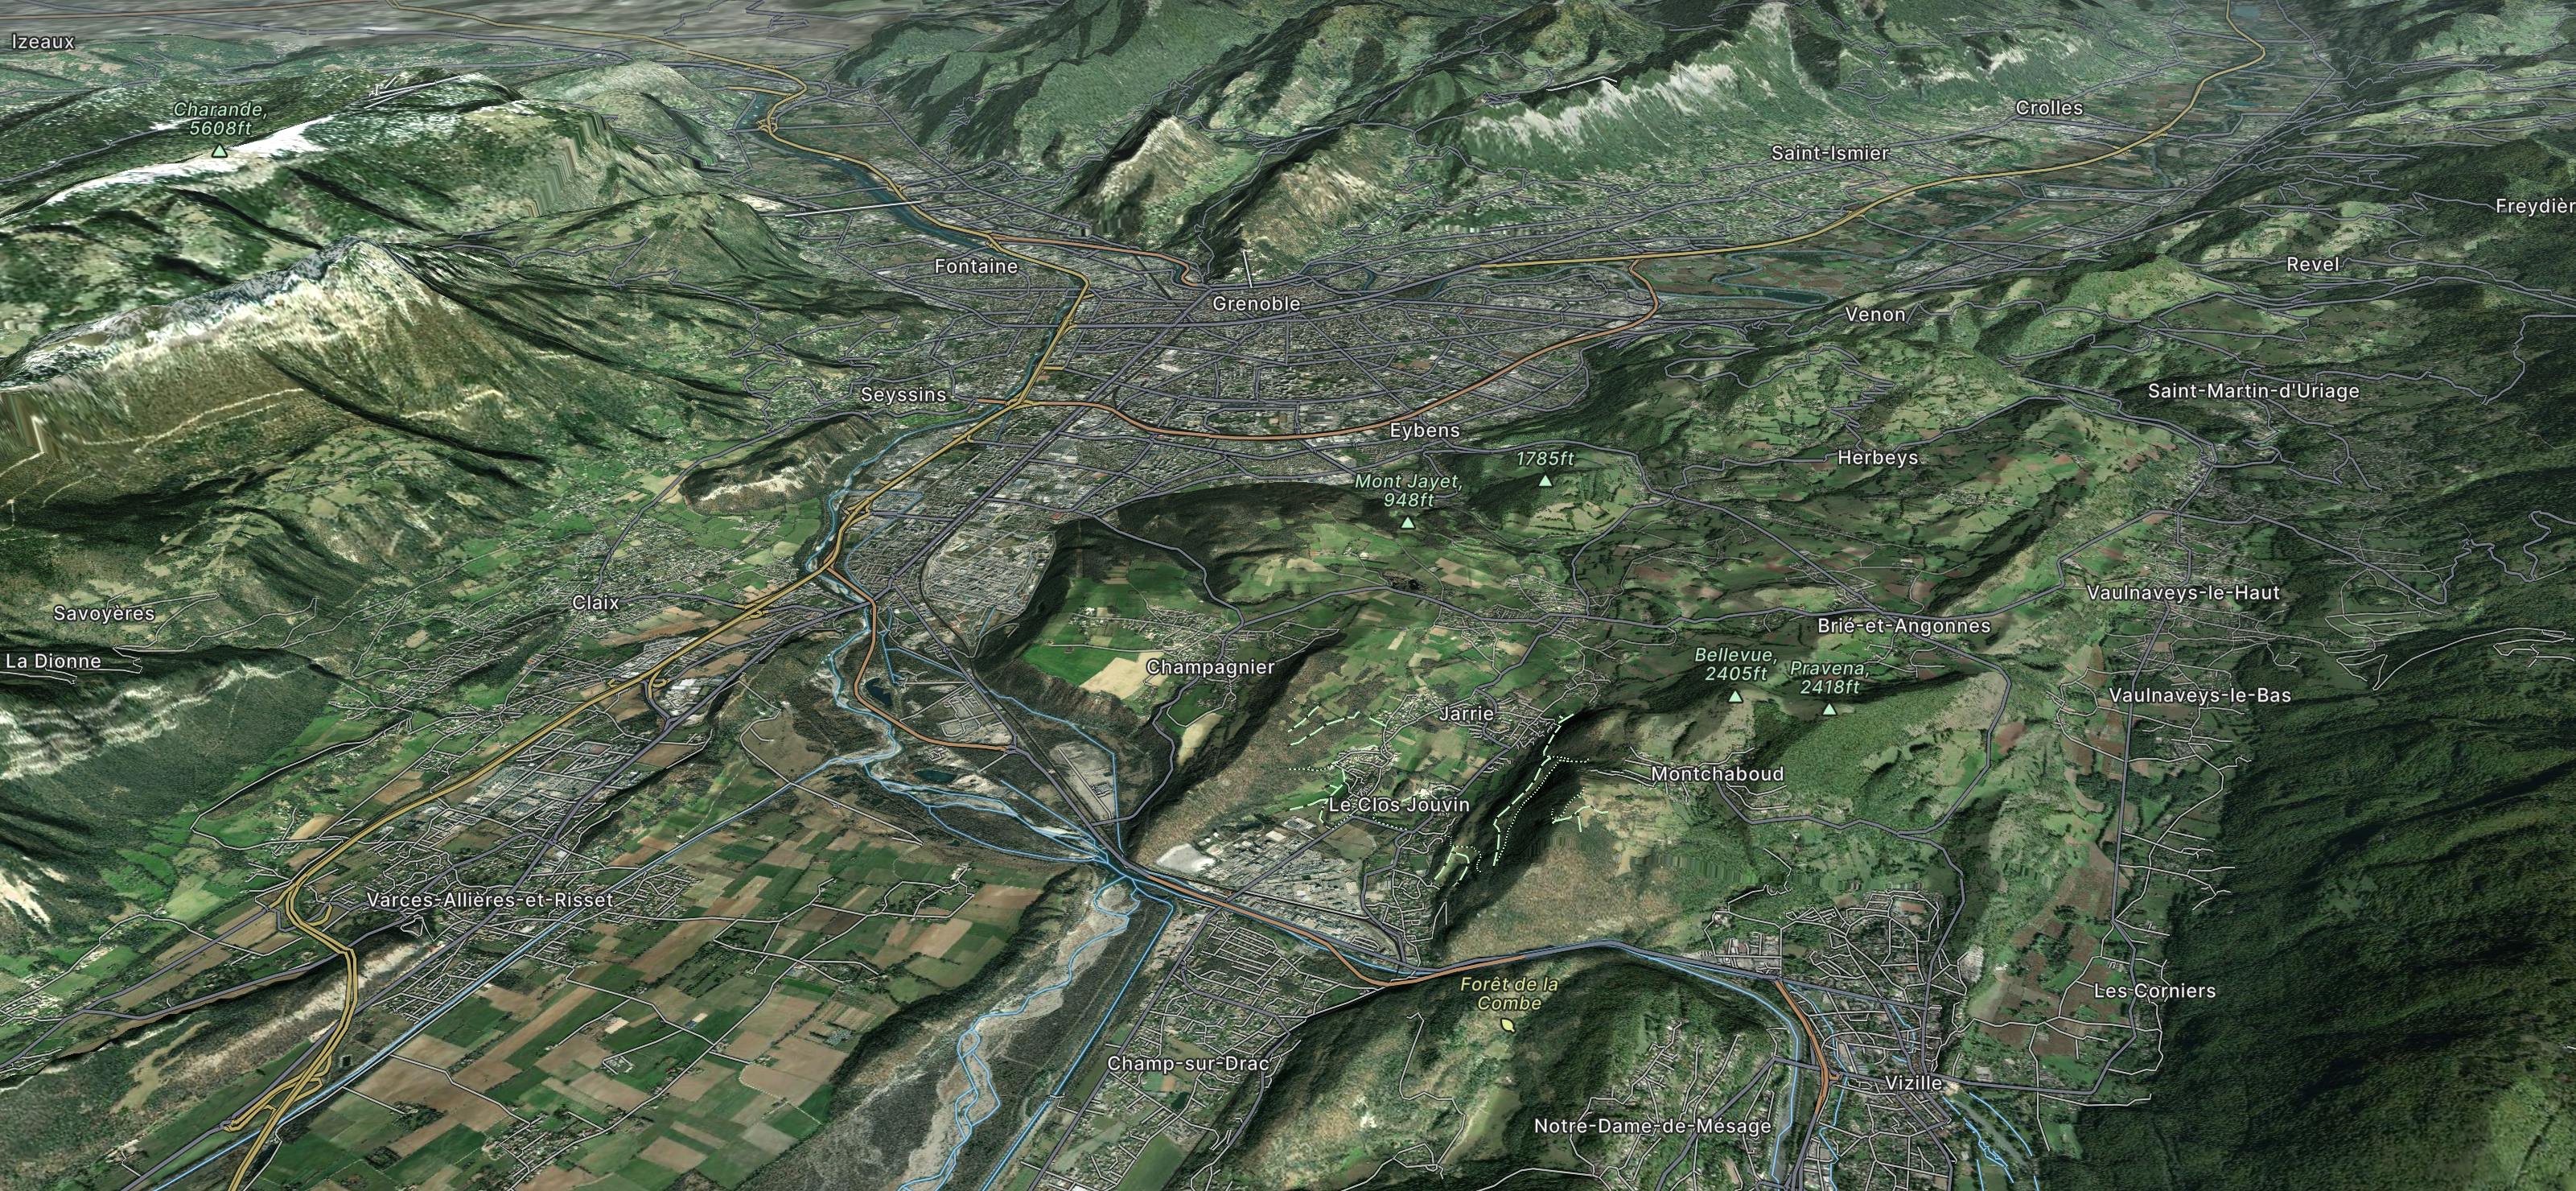 Grenoble Map